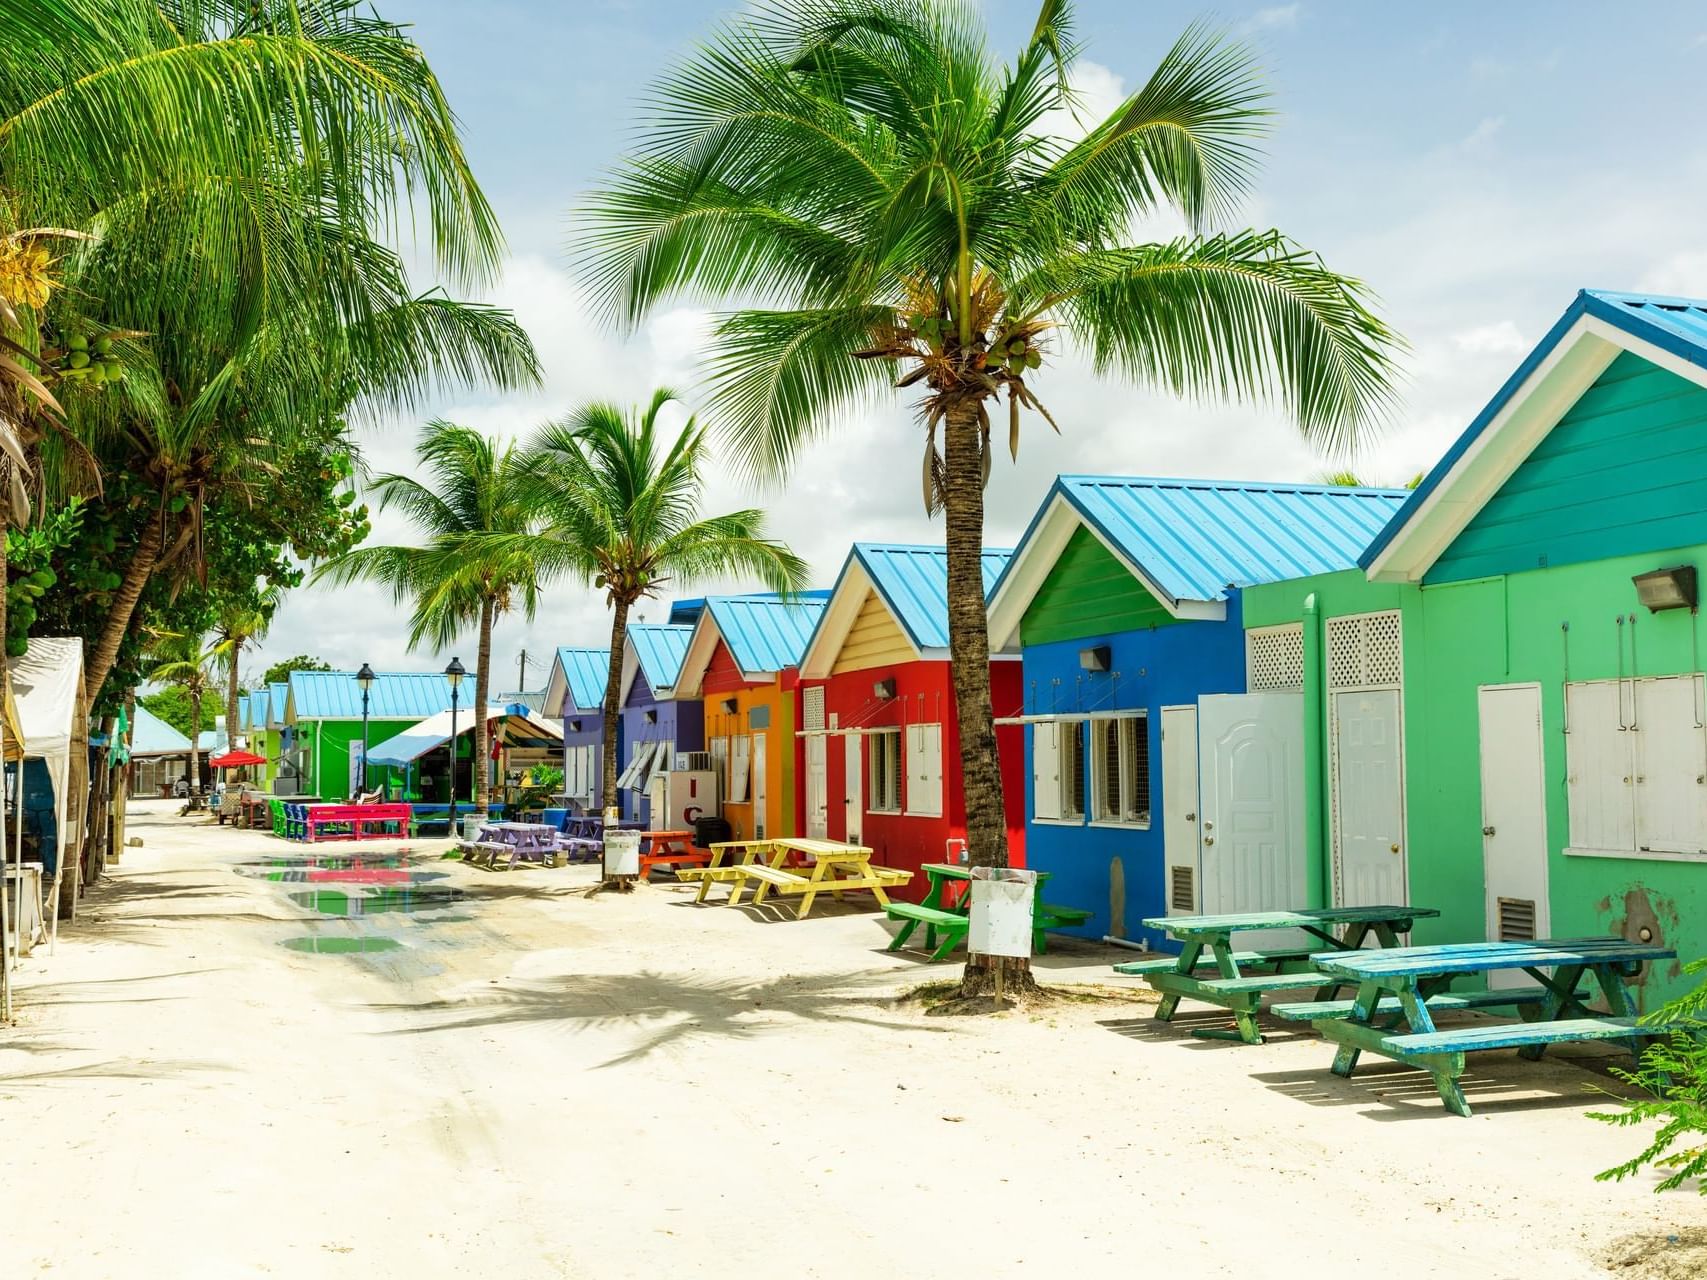 Colorful houses on the beach near Southern Palms Beach Club